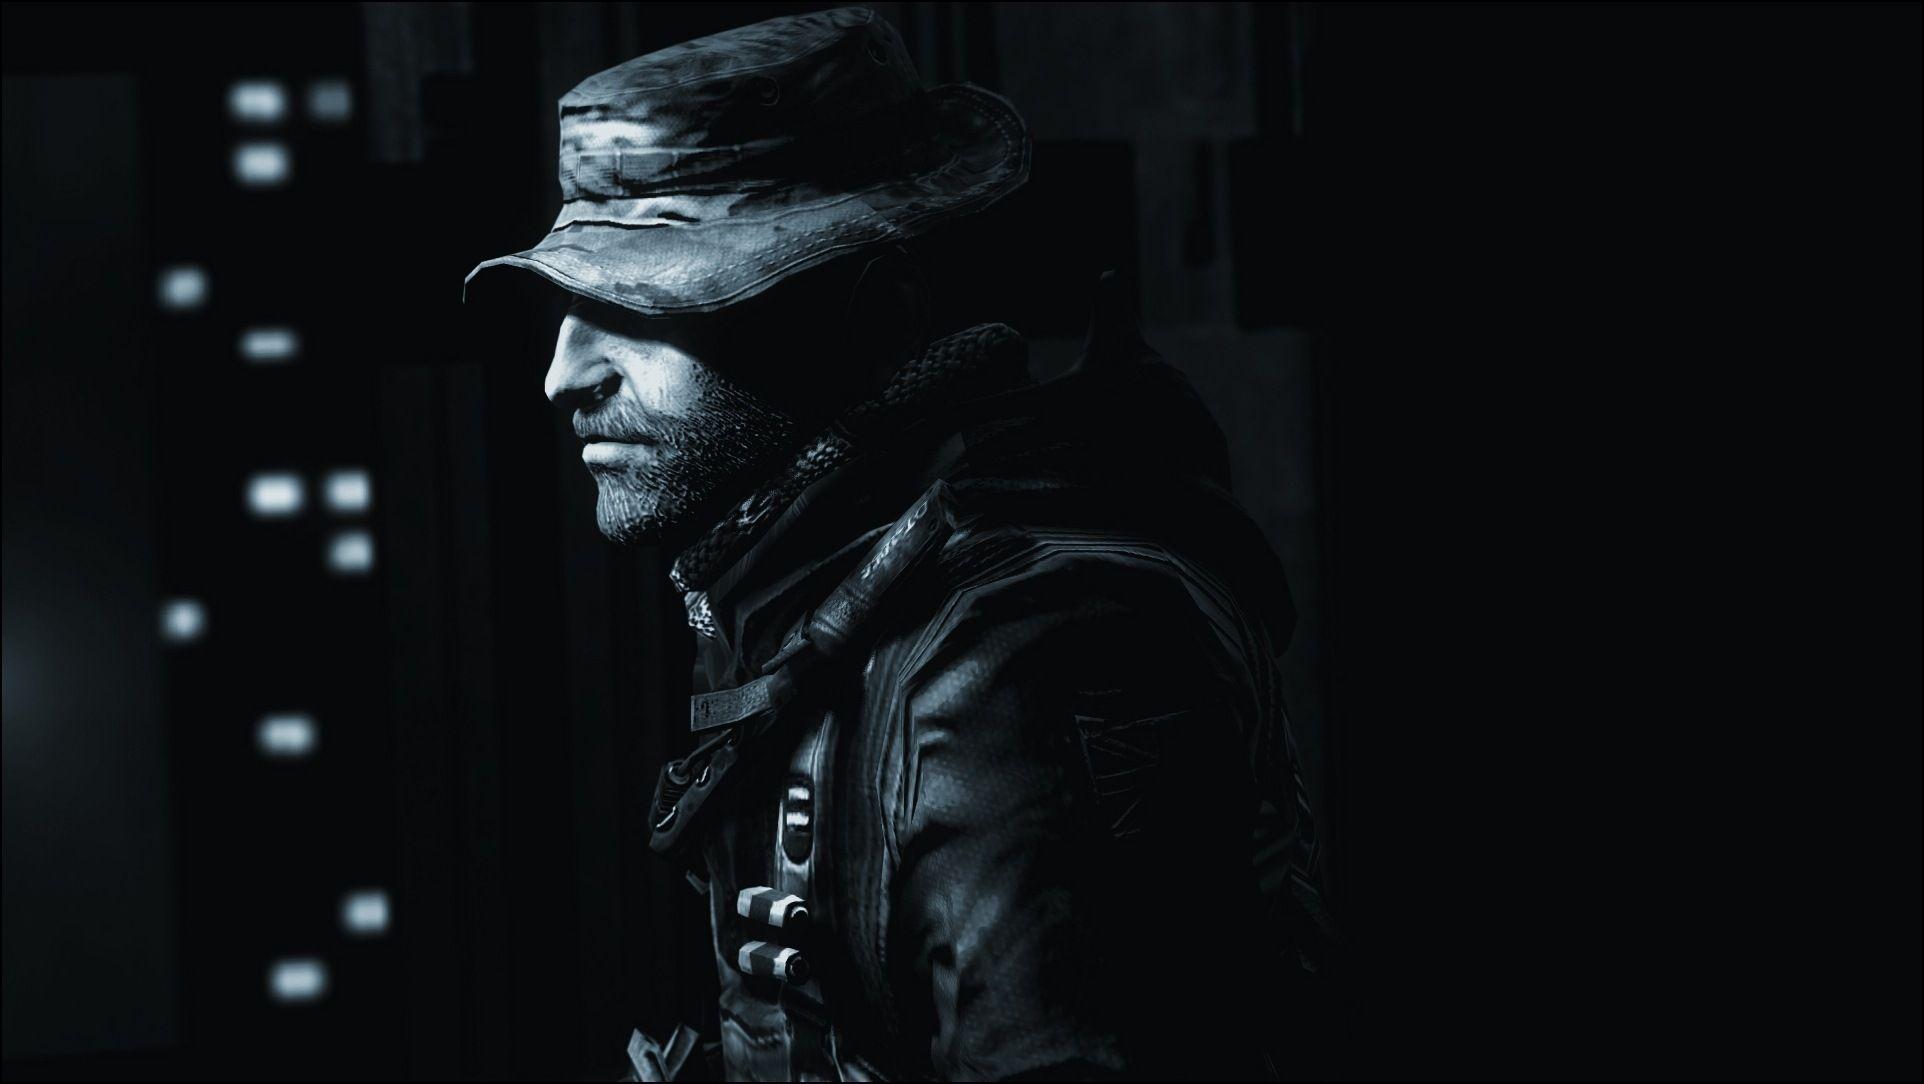 Call of Duty Call of Duty 4: Modern Warfare Games